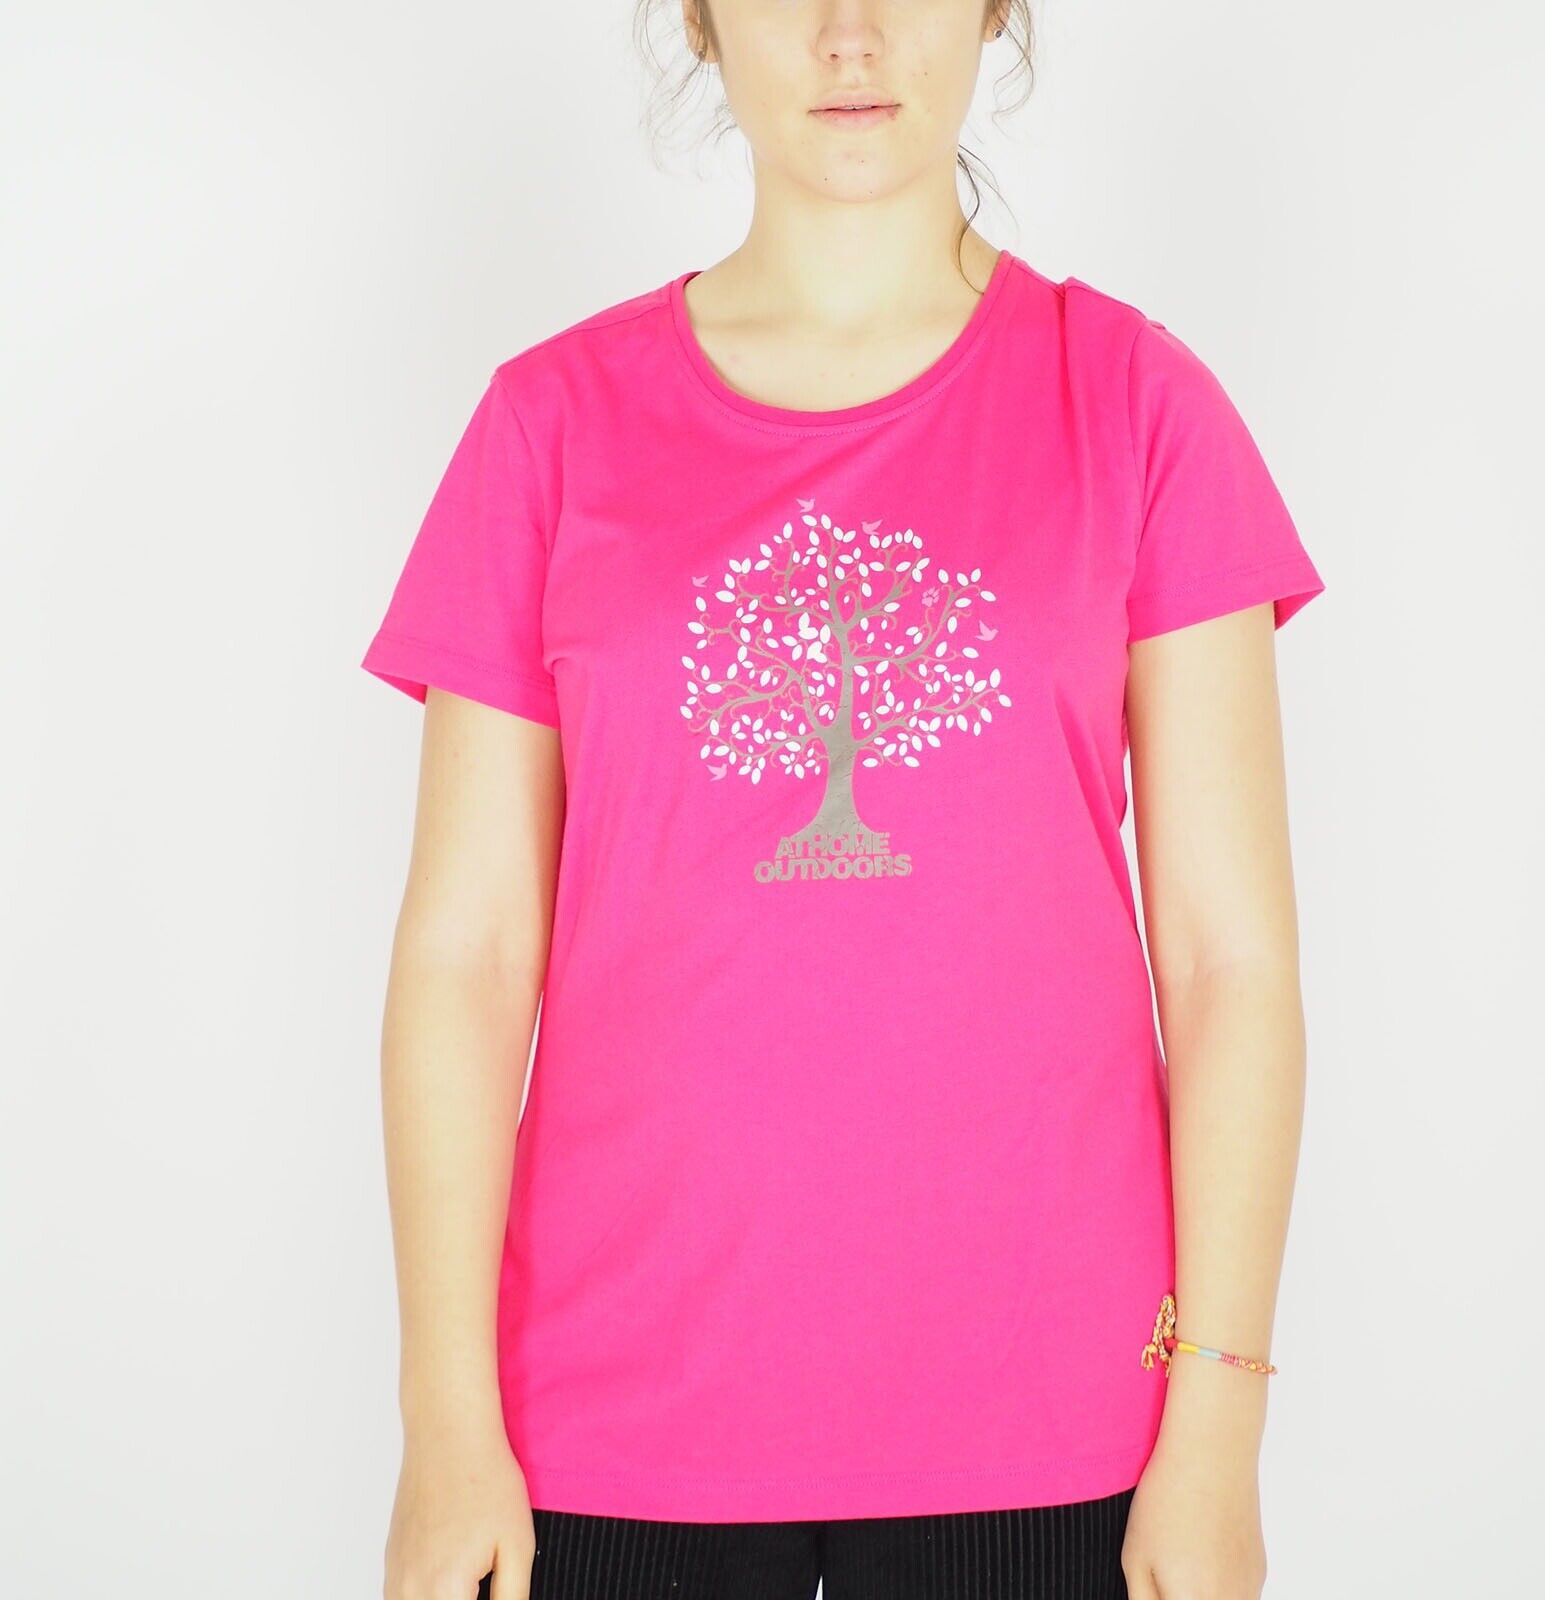 Womens Jack Wolfskin Graphic Tee 5009991 Pink Raspberry Short Sleeve T-Shirt